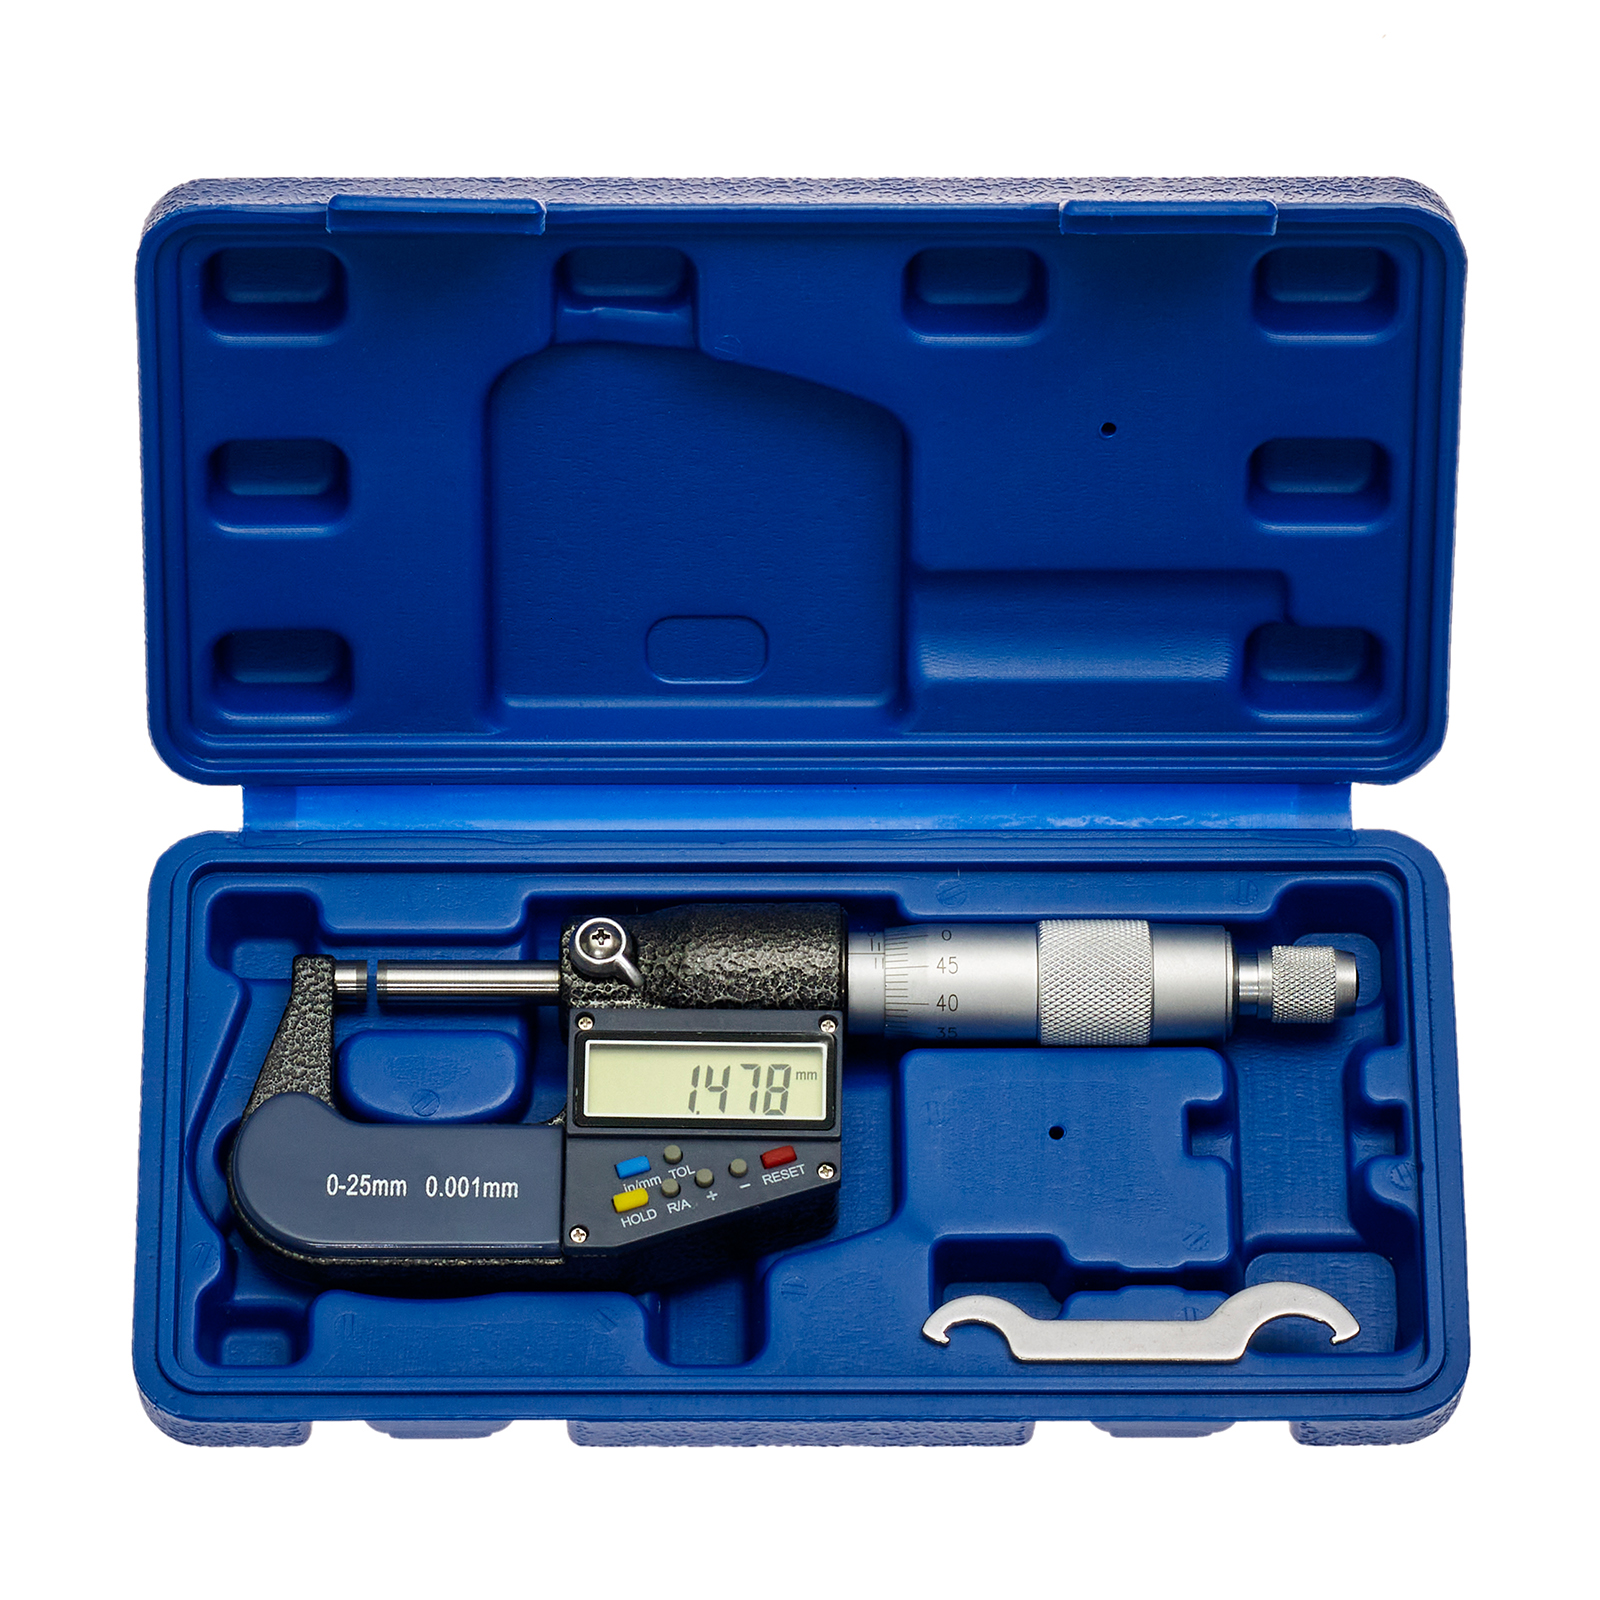 WABECO Digitale Mikrometerschraube 0-25 mm Mikrometer Bügelmessschraube 11392